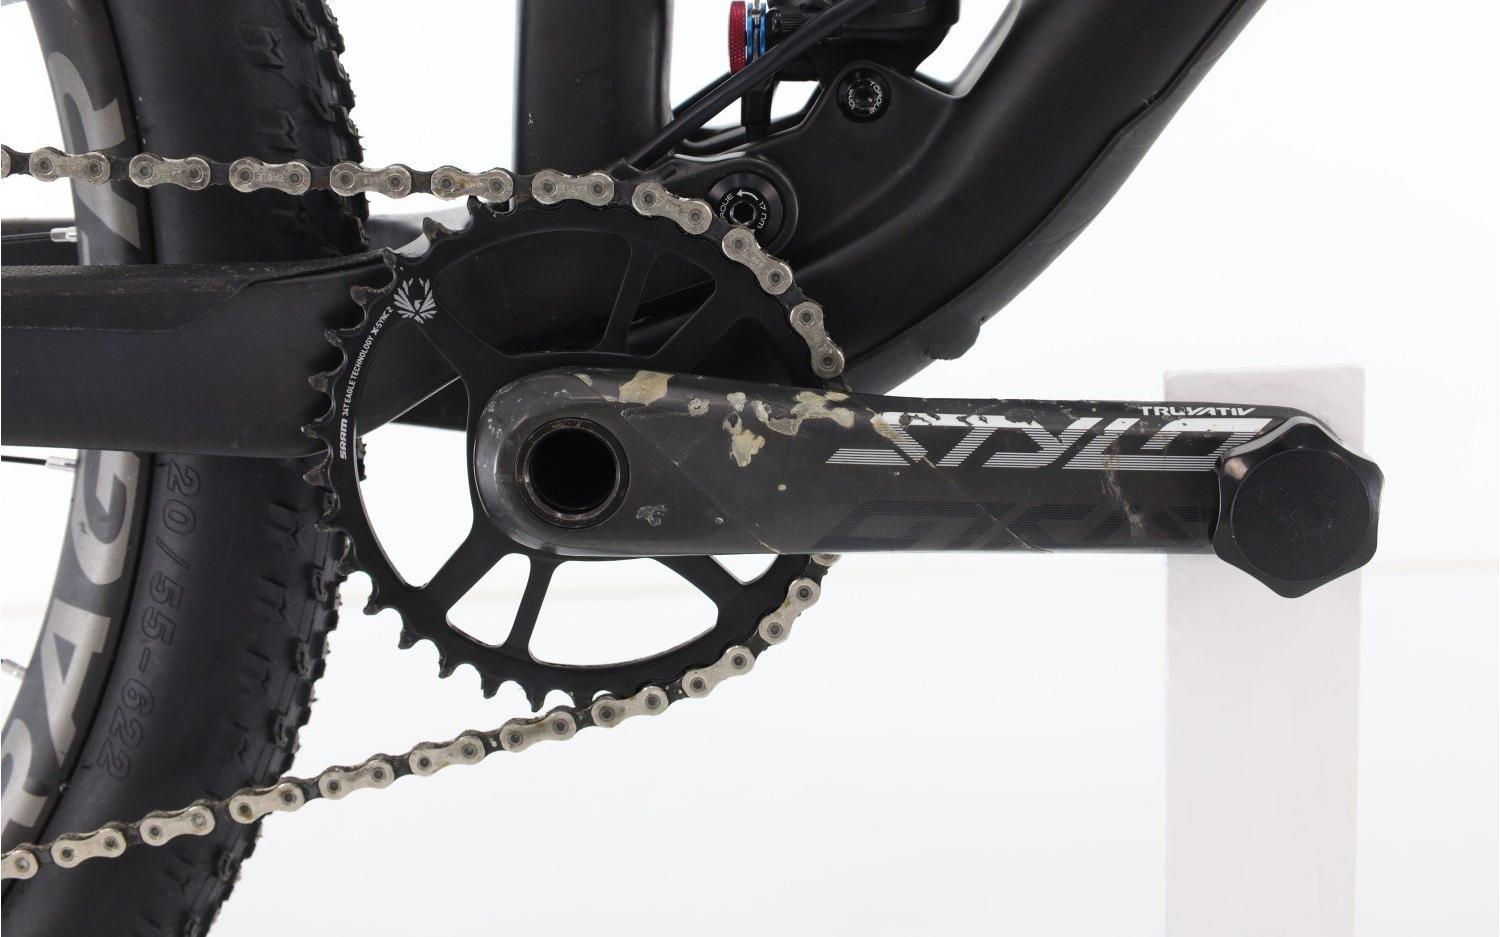 Mountain Bike Trek Zyclora ·  Top Fuel 9.8 carbonio XX1, Usata, 2019, Barcelona